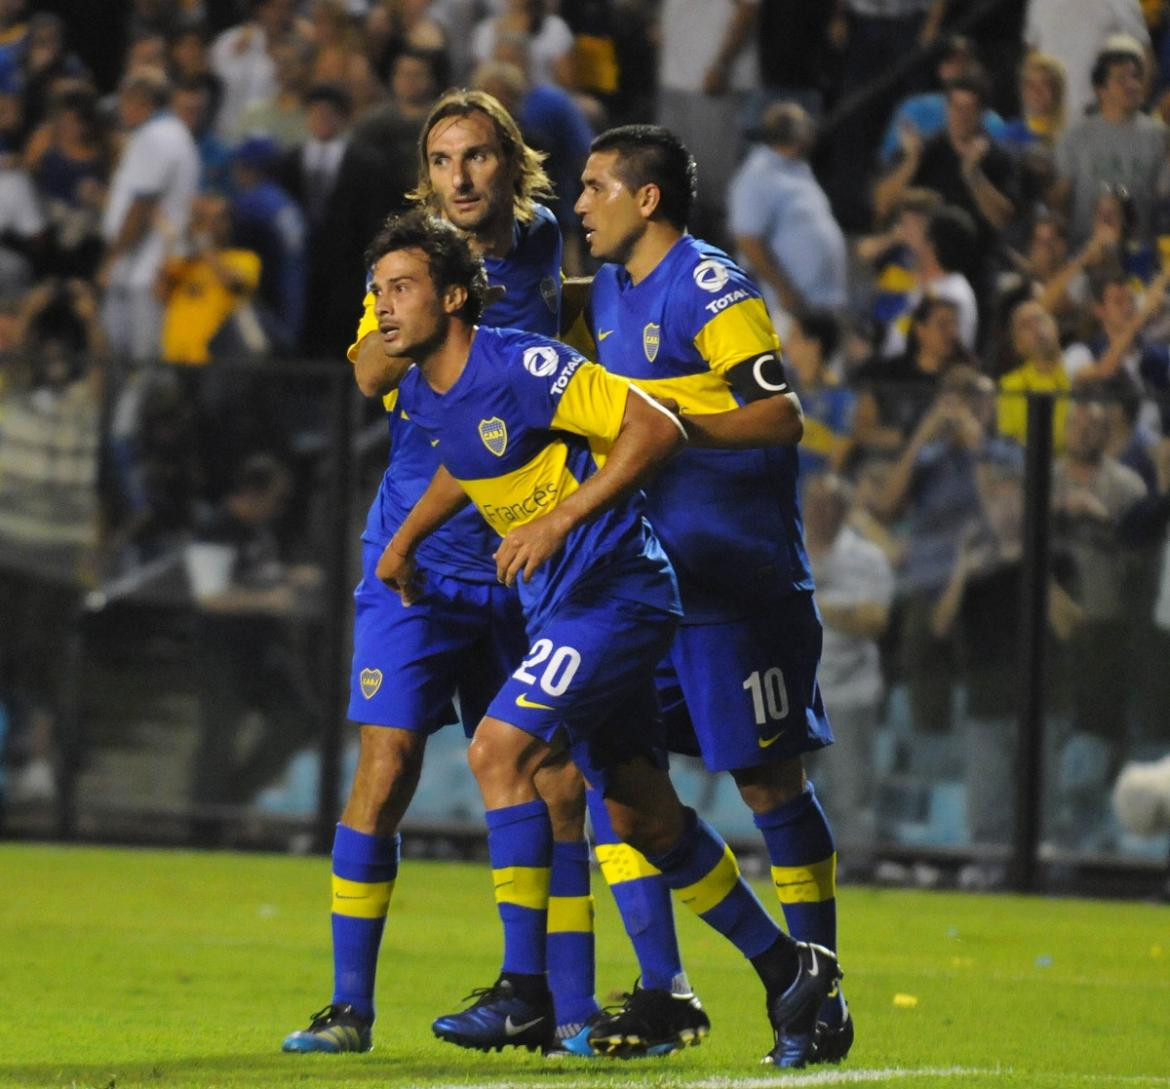 Rolando Schiavi y Juan Roman Riquelme, Boca Juniors, NA.